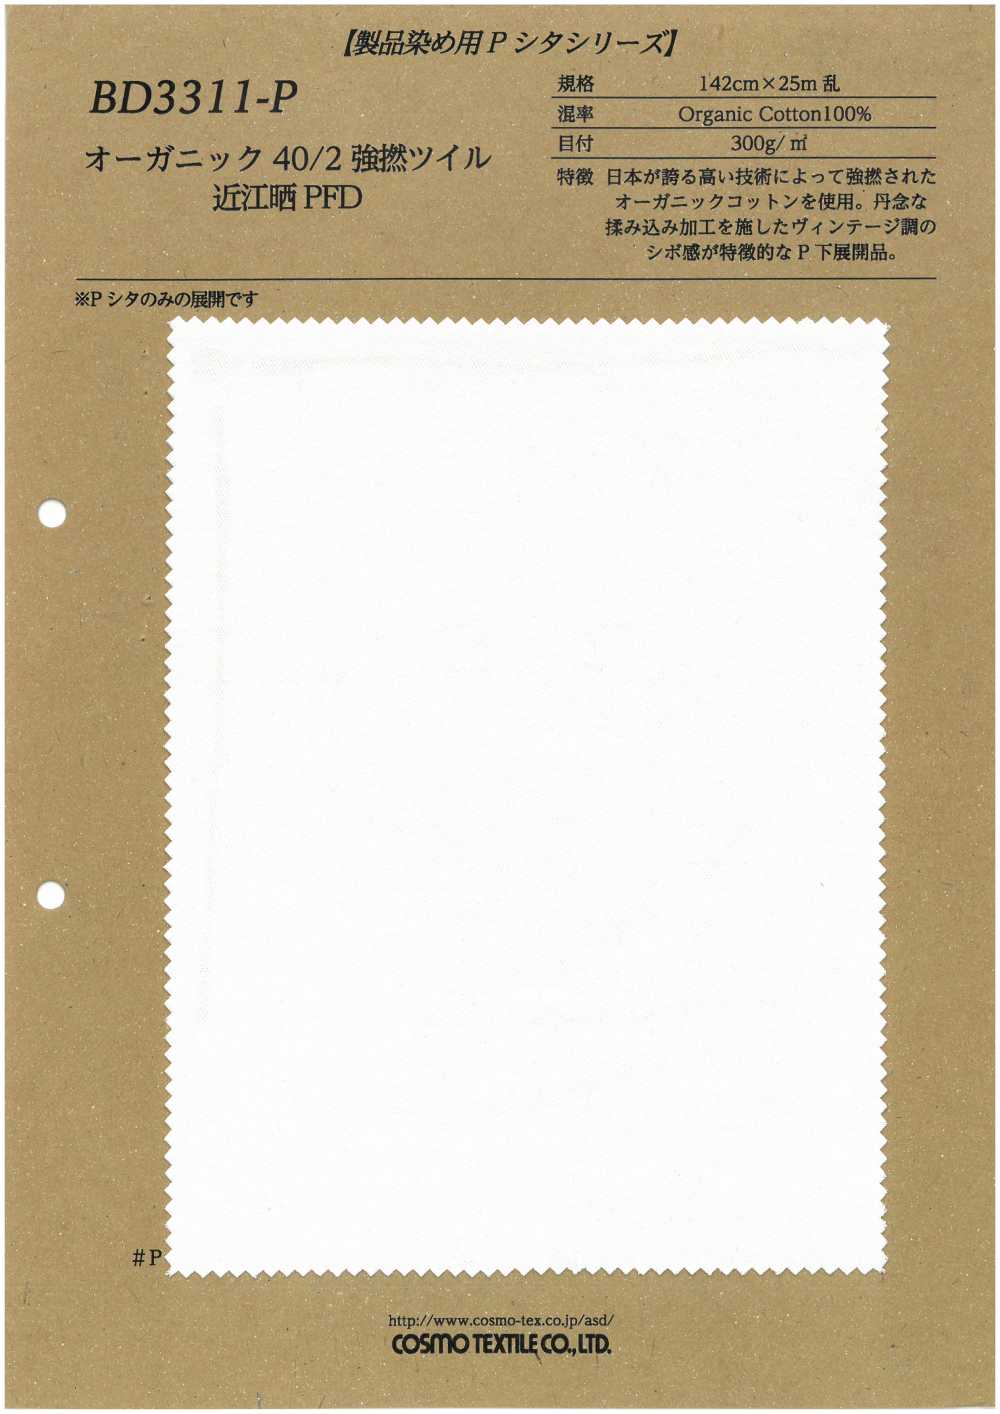 BD3311-P 有機 40/2 強撚斜紋Omi 漂白 PFD[面料] Cosmo Textile 日本